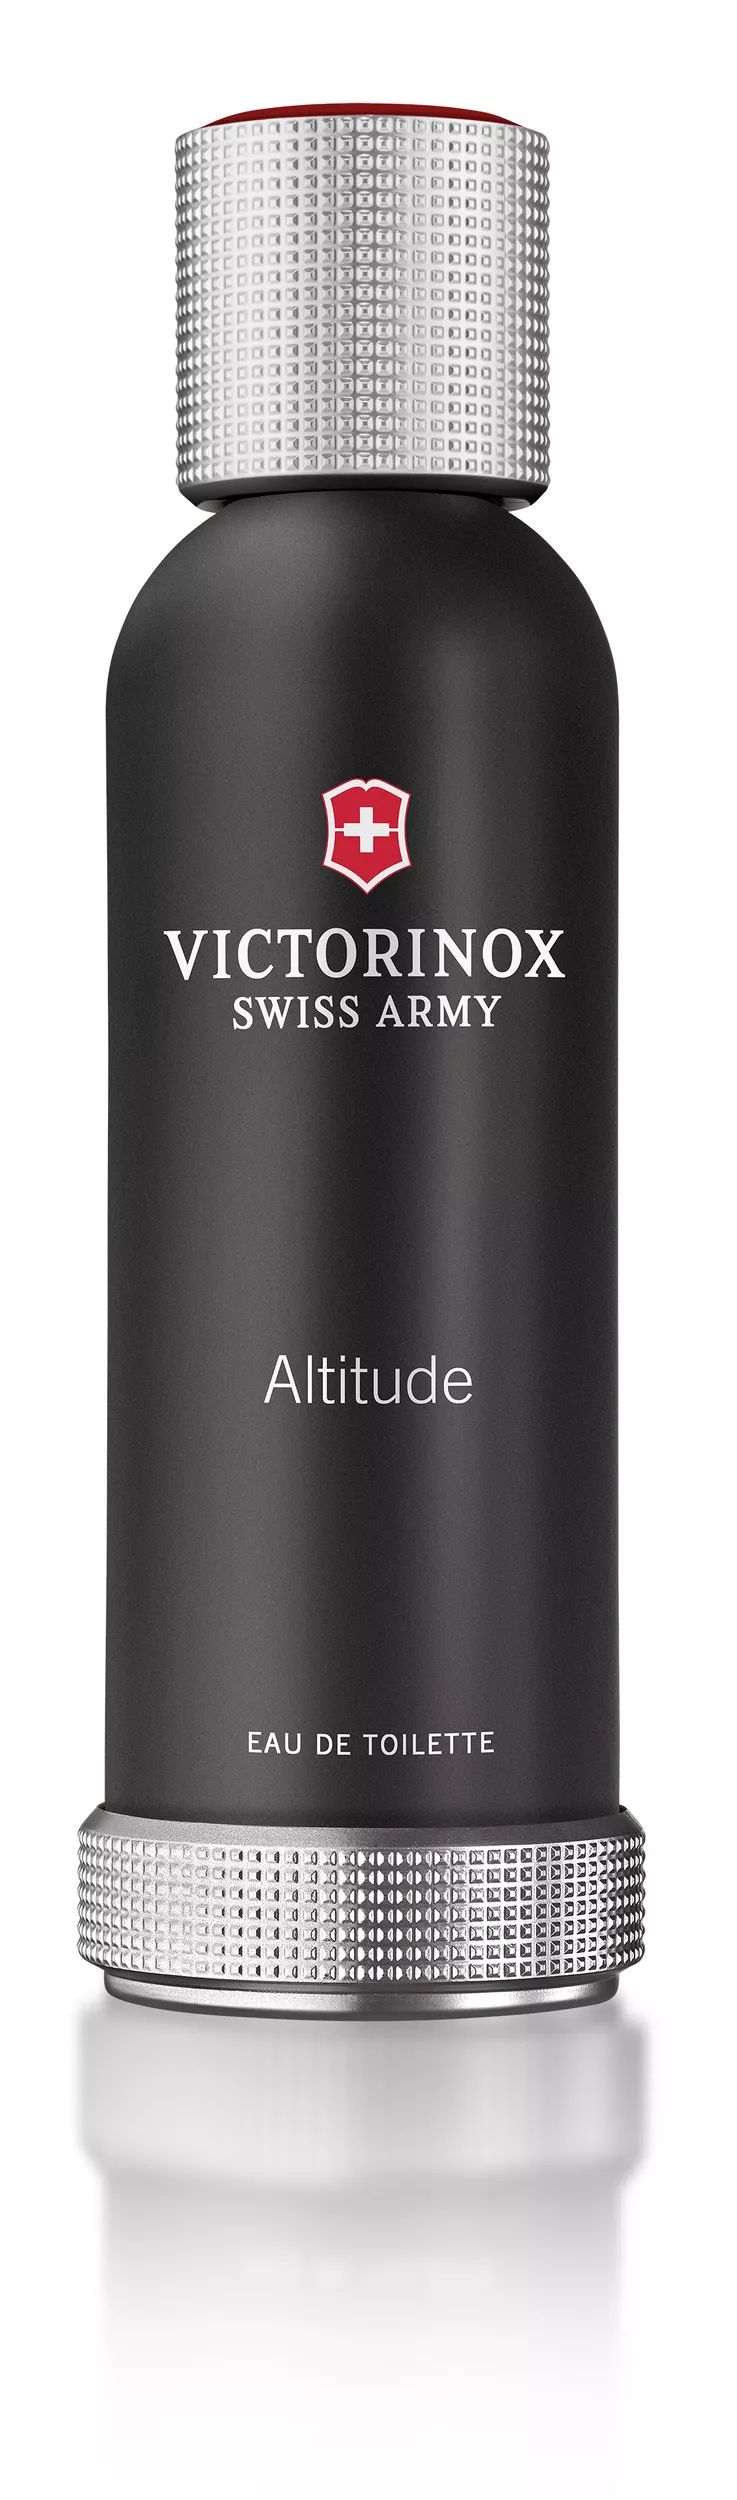 Swiss Army Altitude-V0000892